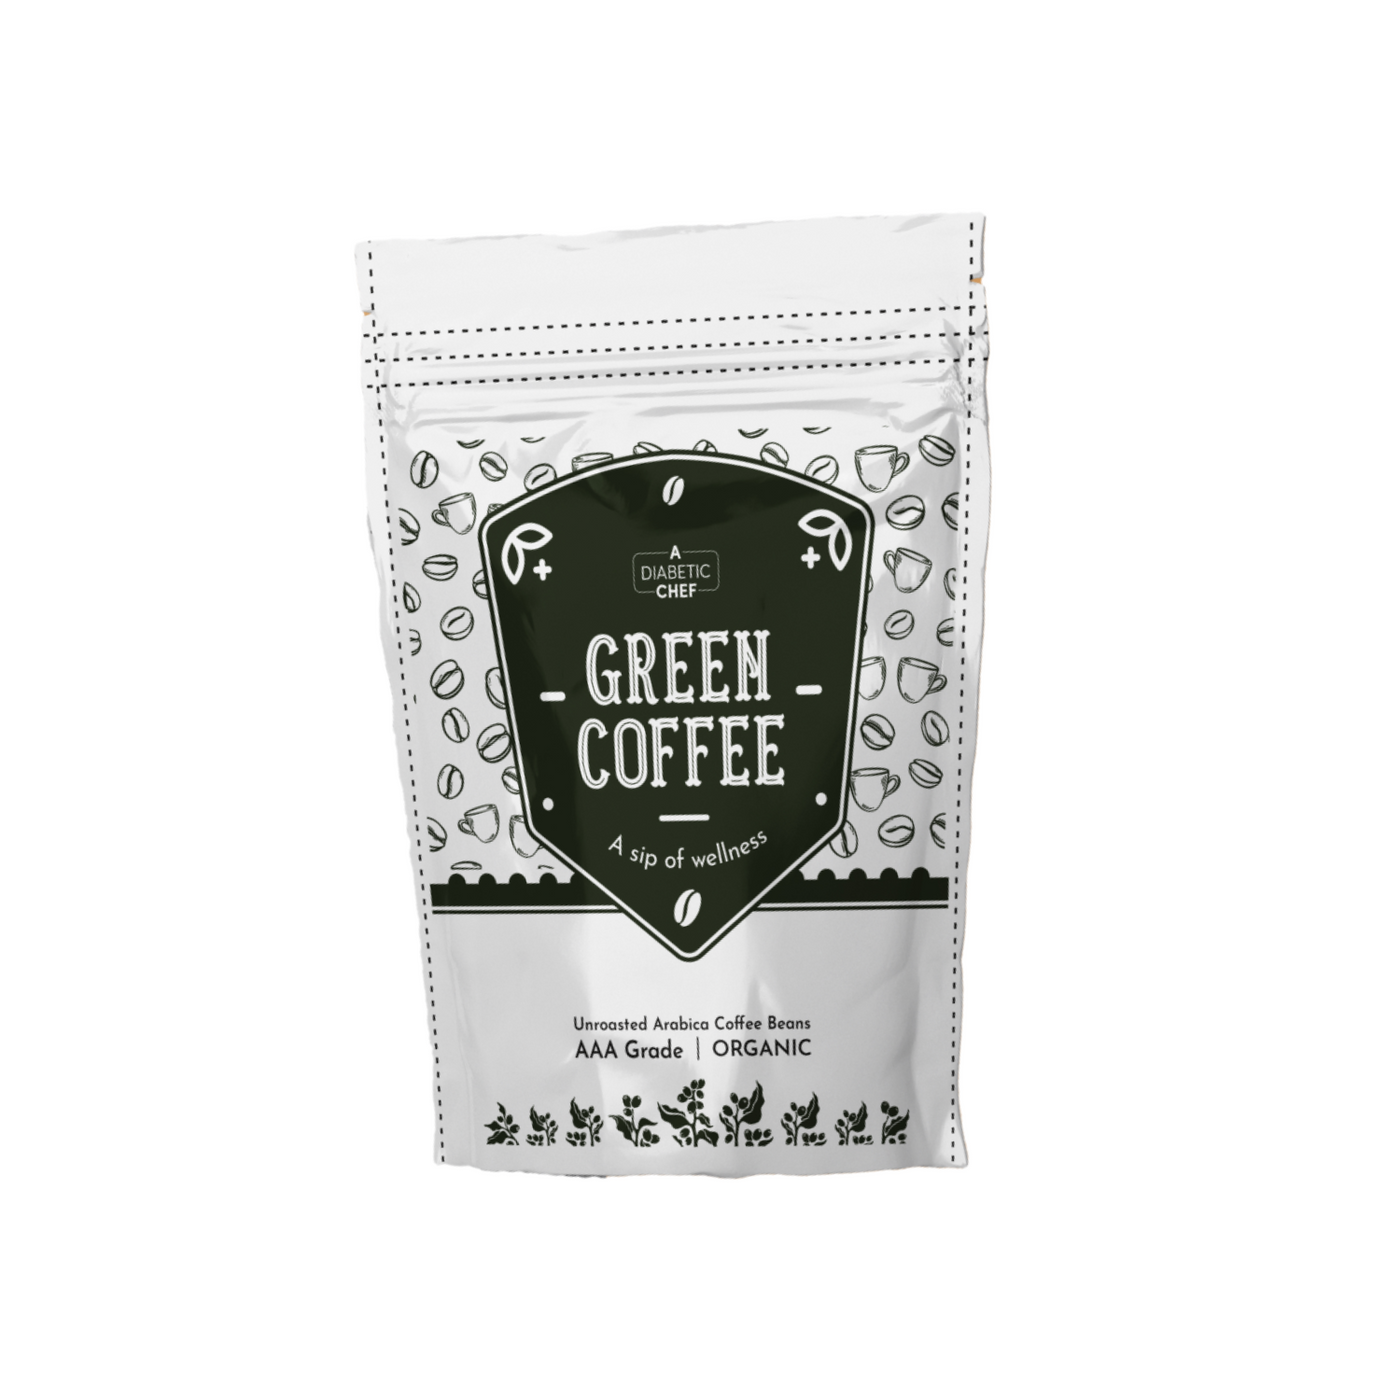 A Diabetic Chef Green Coffee Beans | 100% Organic Sugarfree Unroasted Arabica Coffee Beans | AAA Grade | Vegan - 400g